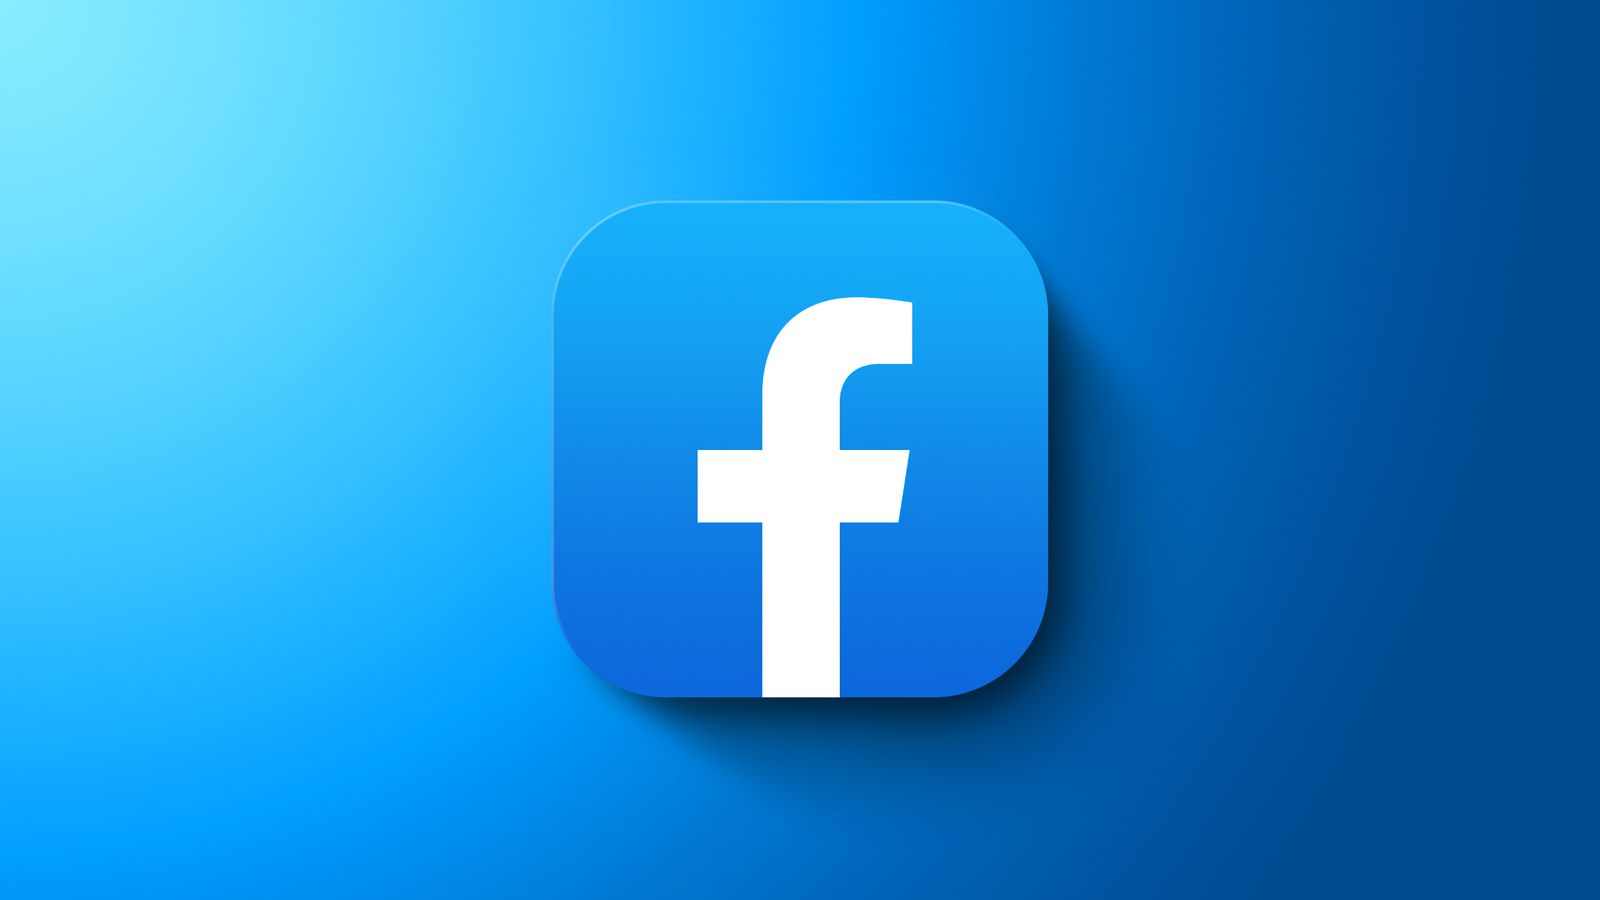 Facebook marketing software